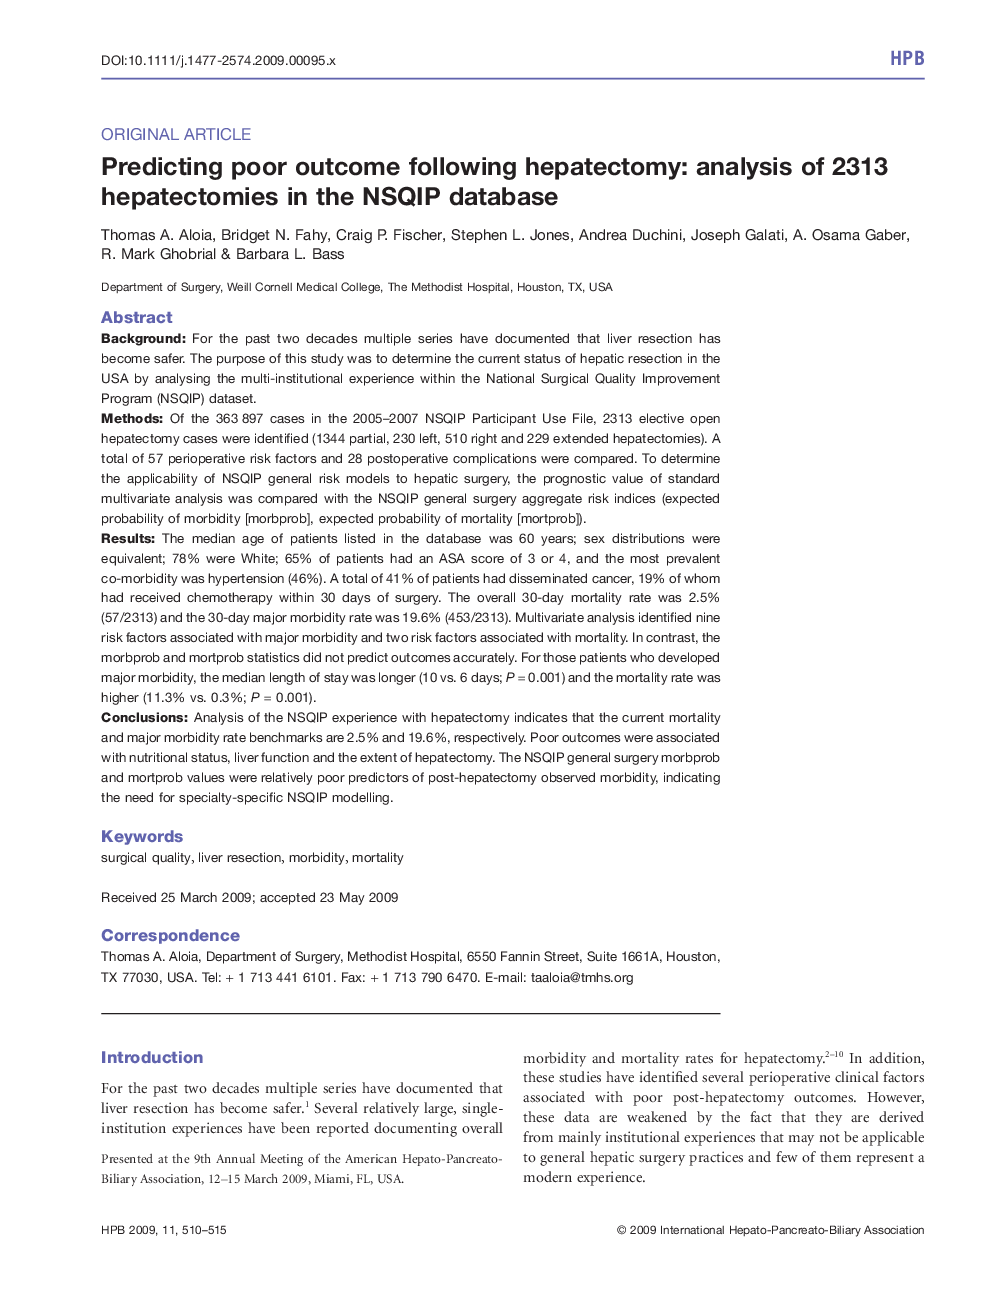 Predicting poor outcome following hepatectomy: analysis of 2313 hepatectomies in the NSQIP database